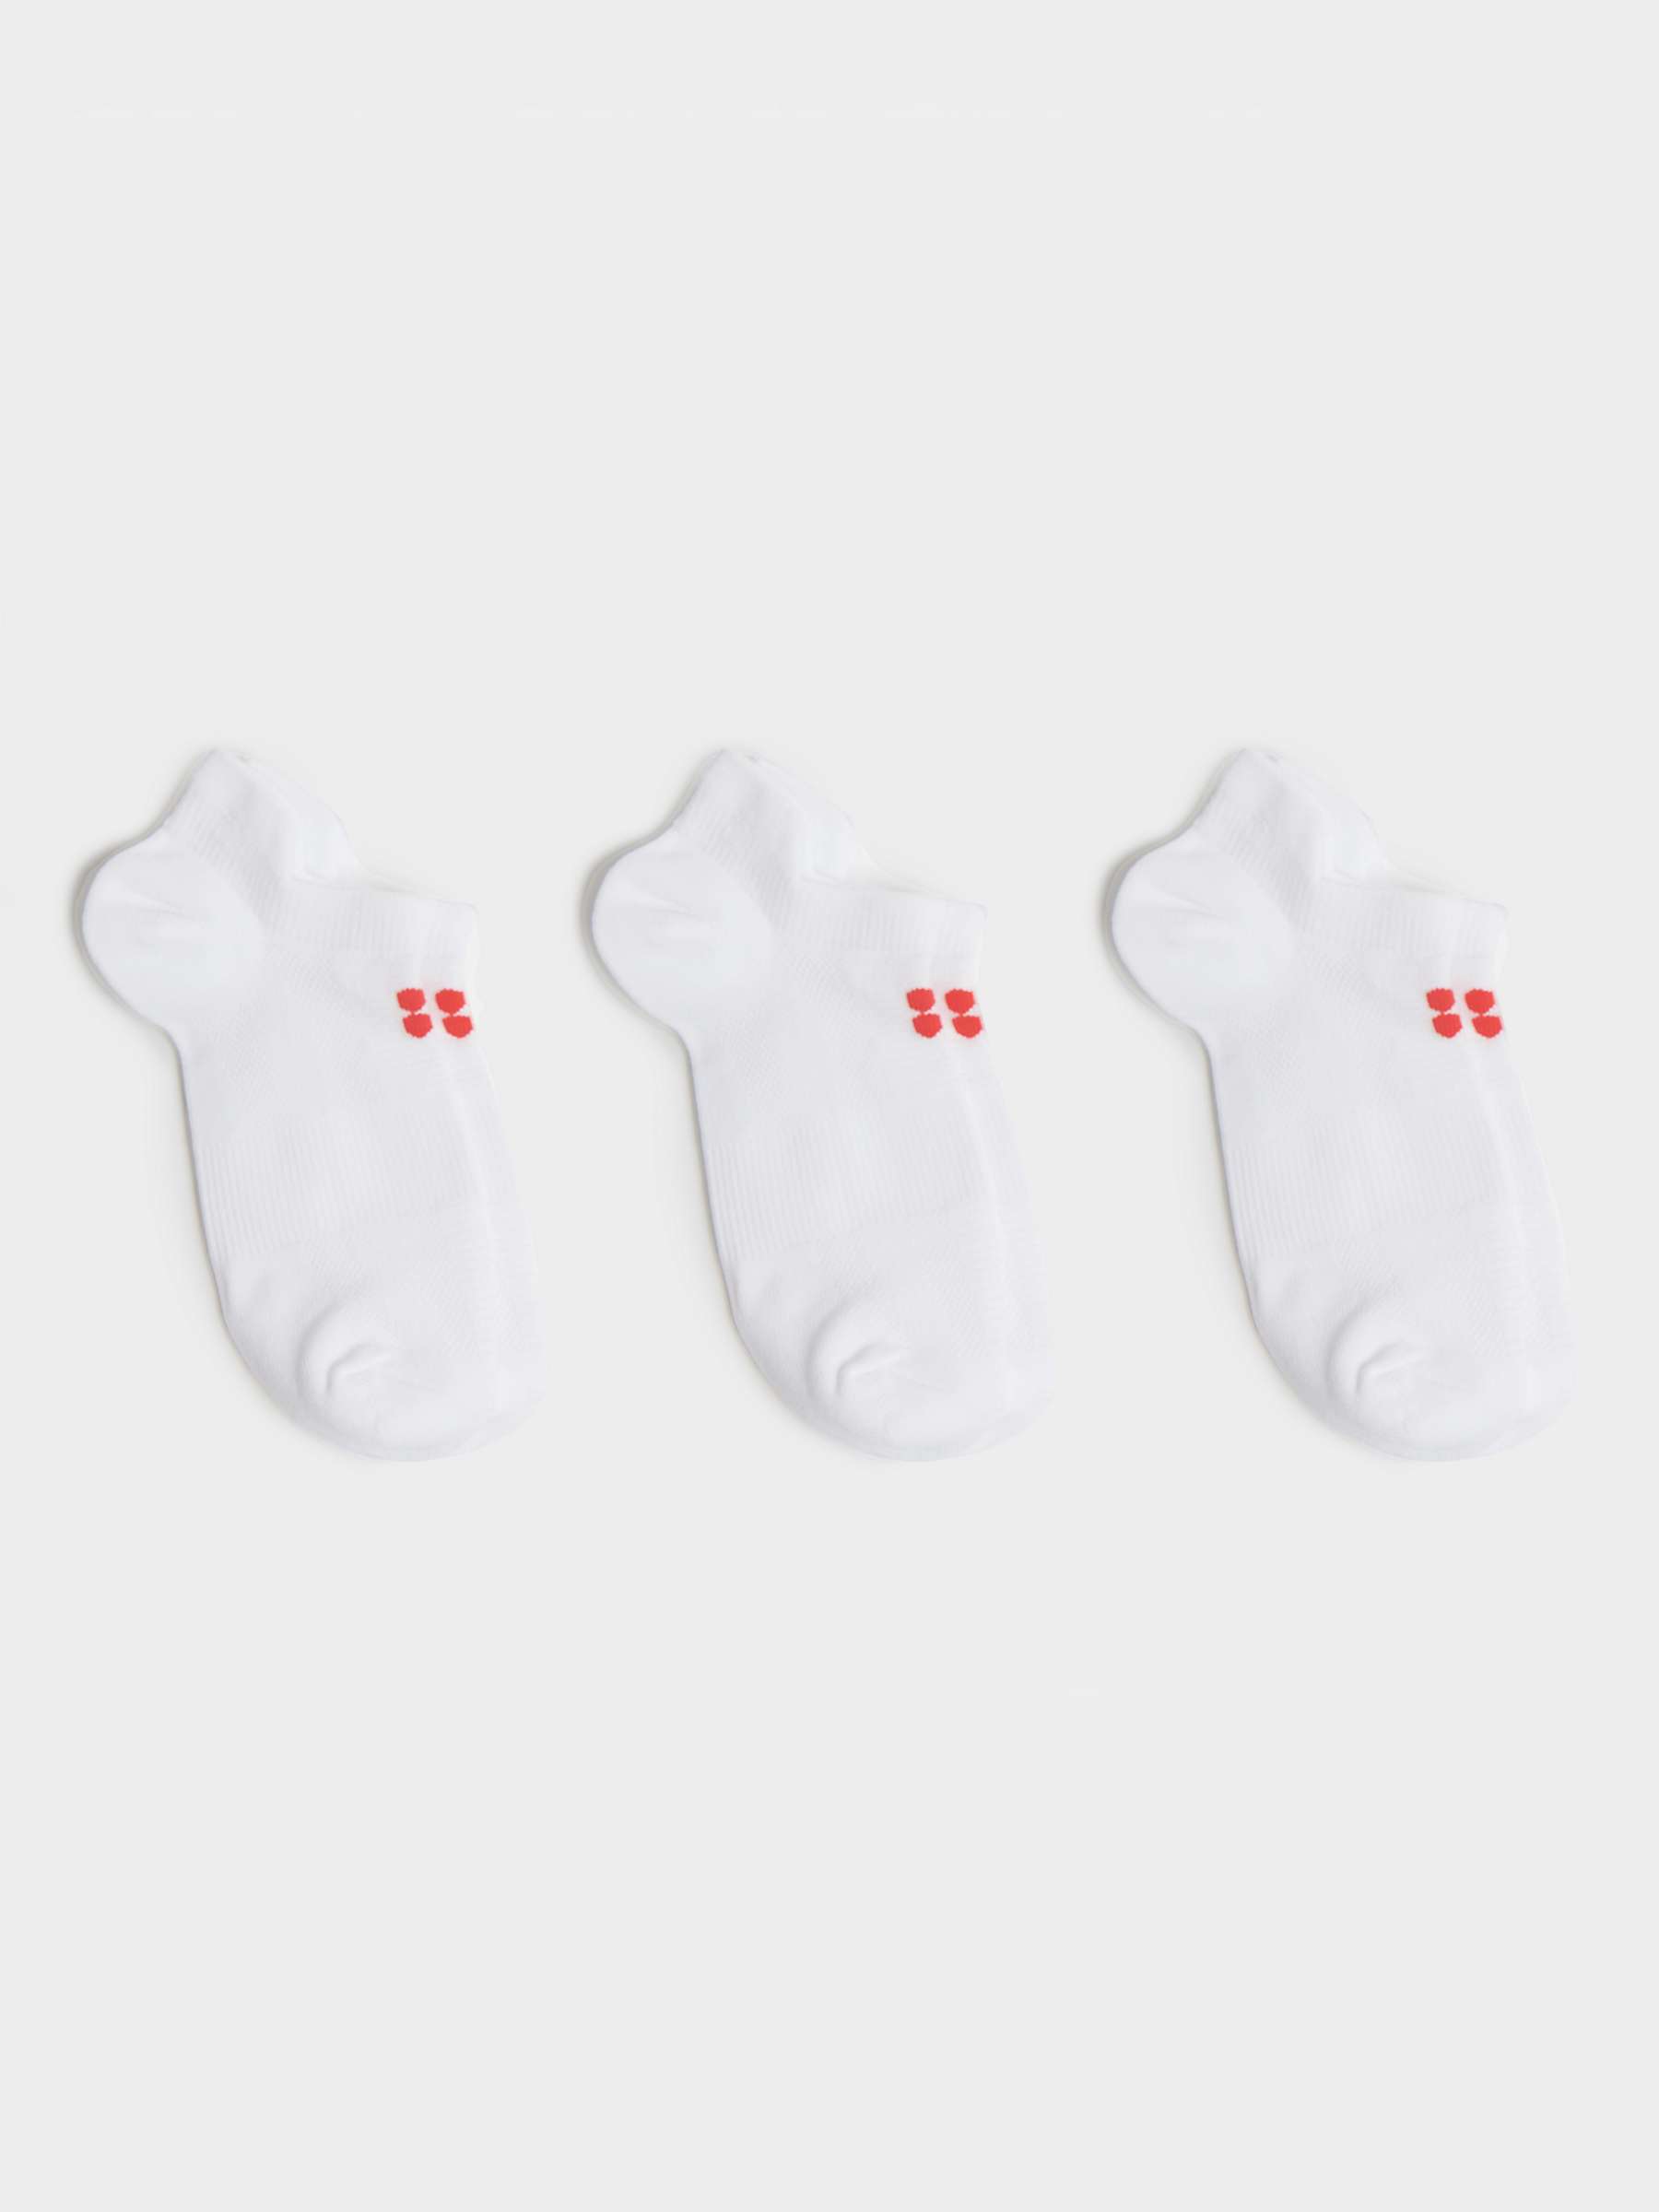 Buy Sweaty Betty Lightweight Trainer Socks, Pack of 3, White Online at johnlewis.com